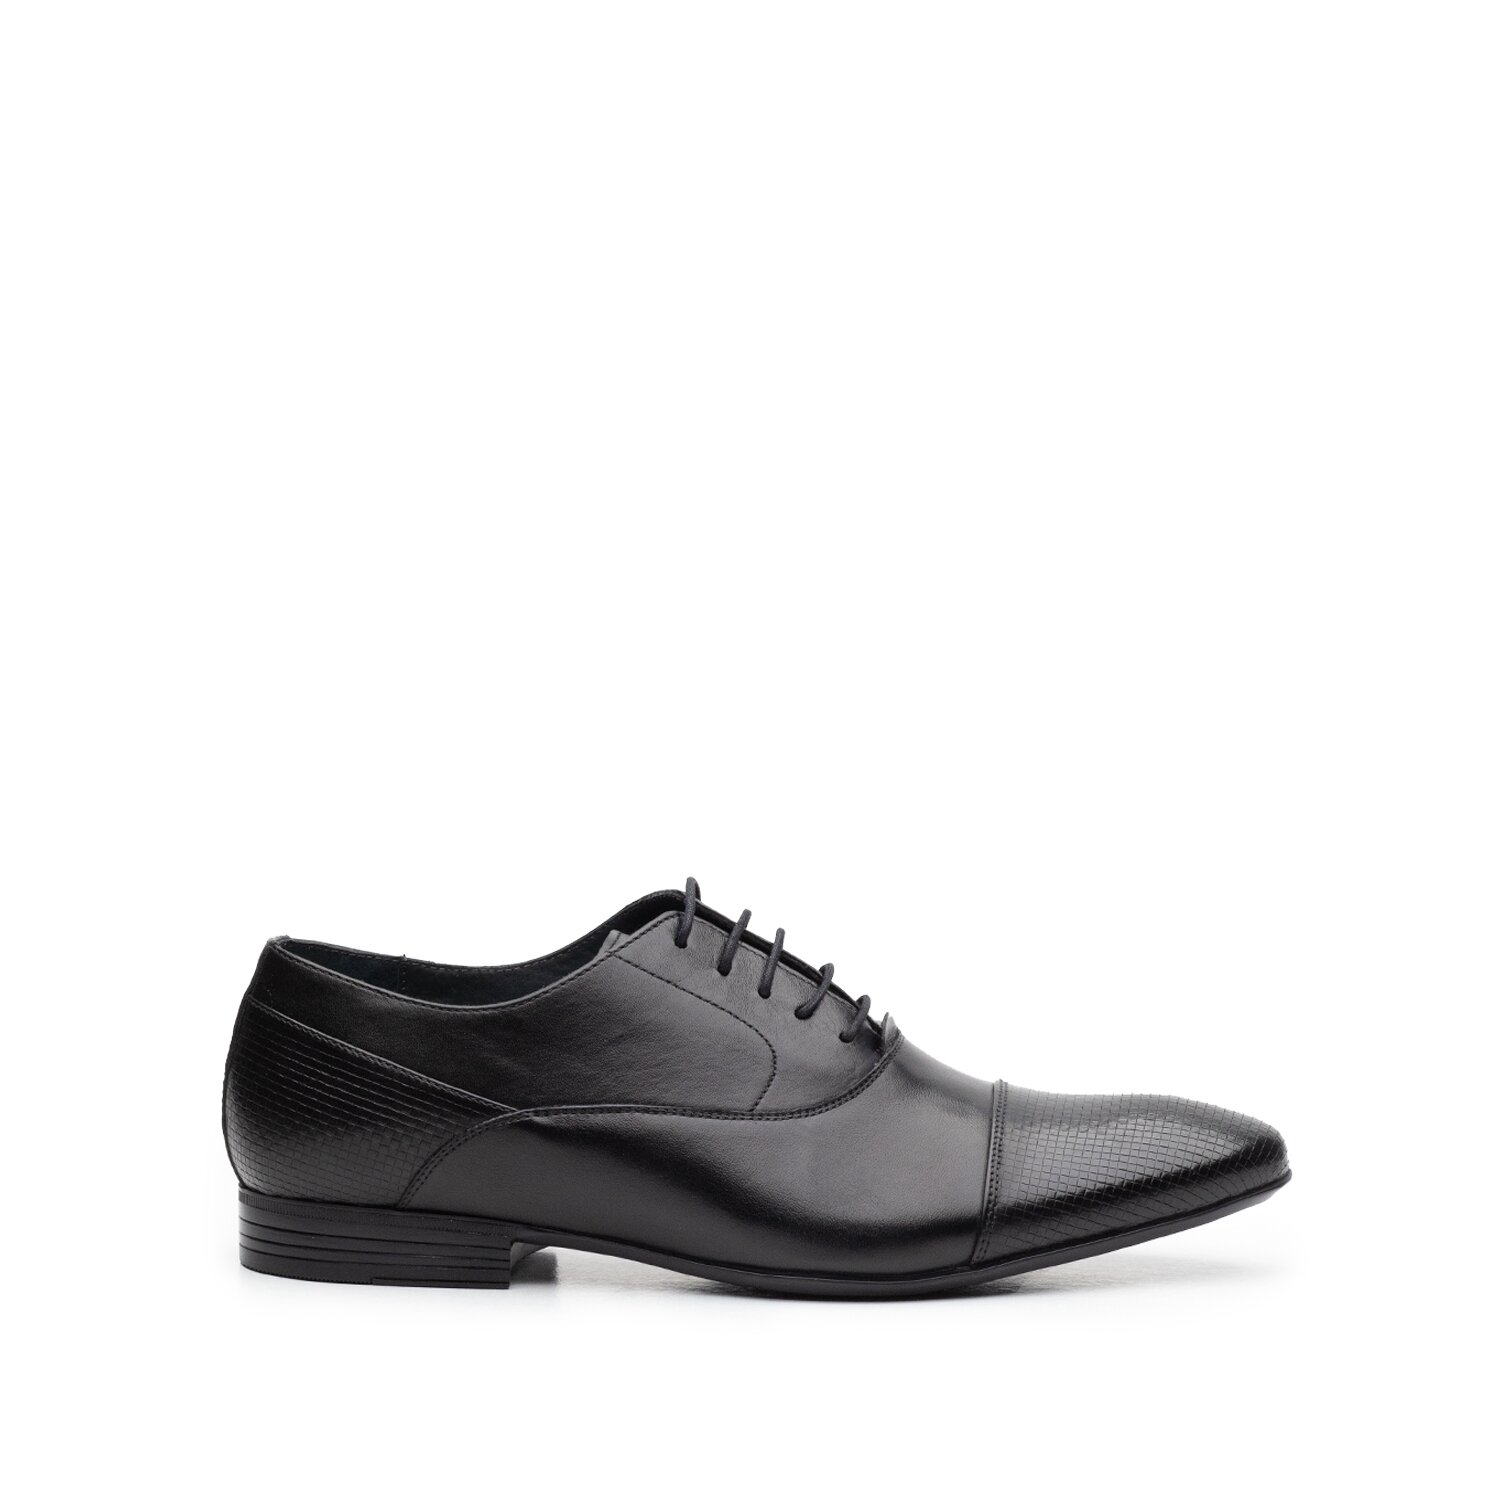 Pantofi eleganti barbati din piele naturala,Leofex - 834 negru box